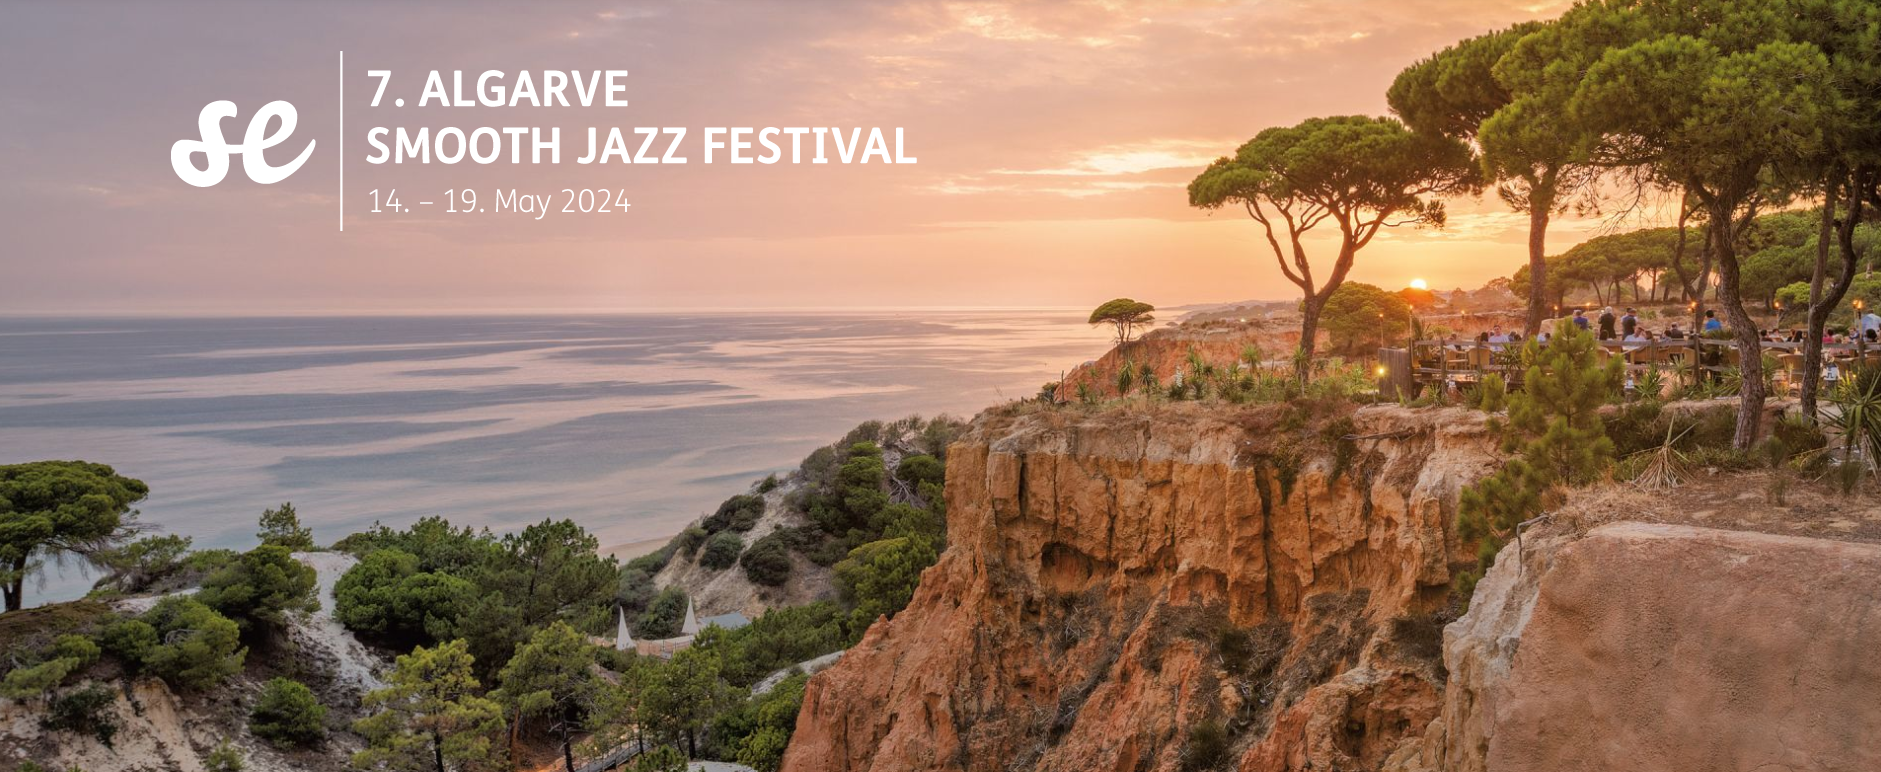 Algarve Smooth Jazz Festival